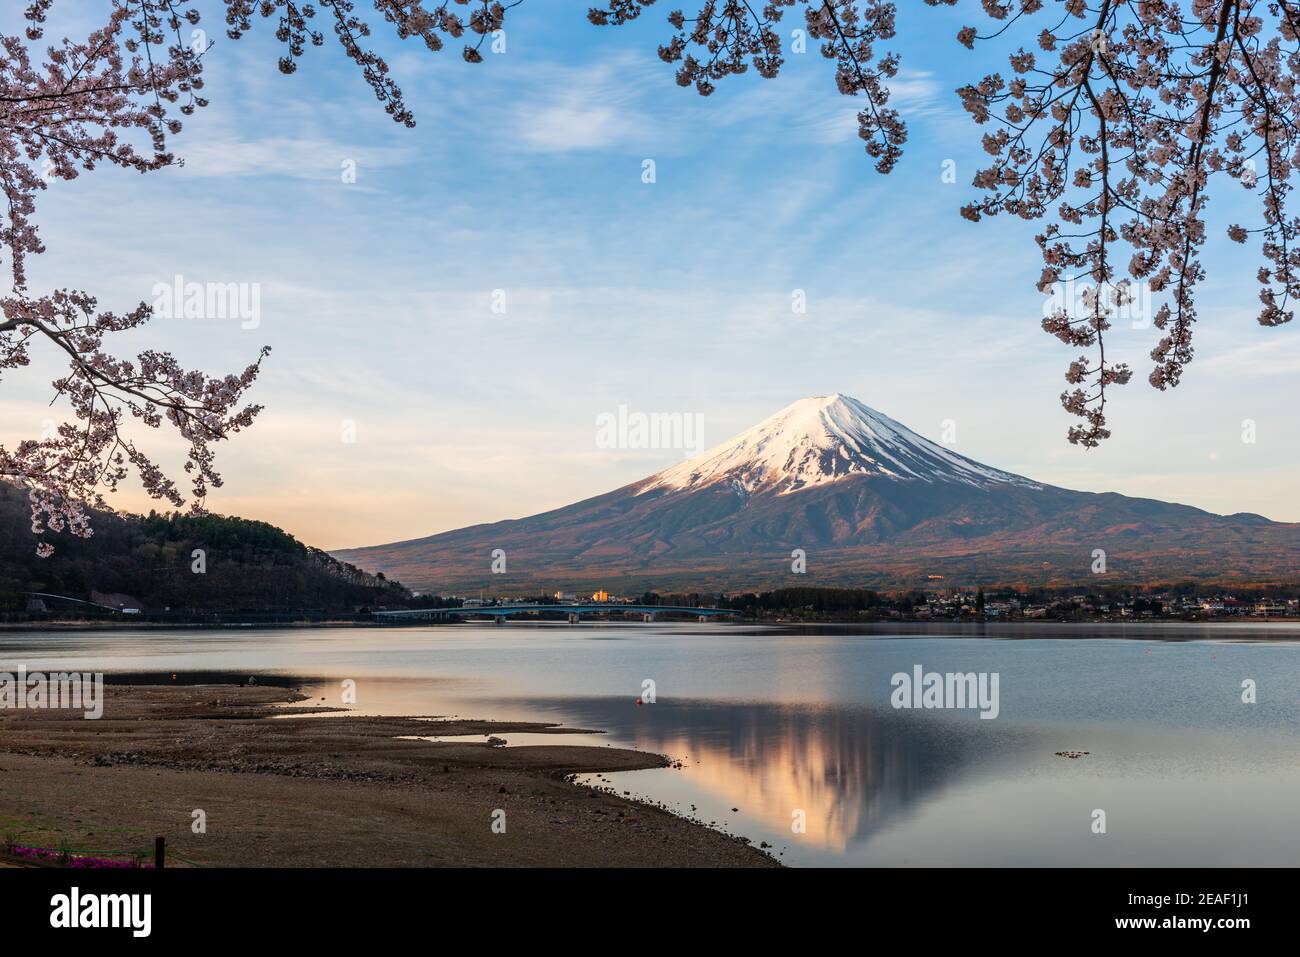 Mt. Fuji, Japan am Kawaguchi See während der Frühjahrssaison mit Kirschblüten. Stockfoto